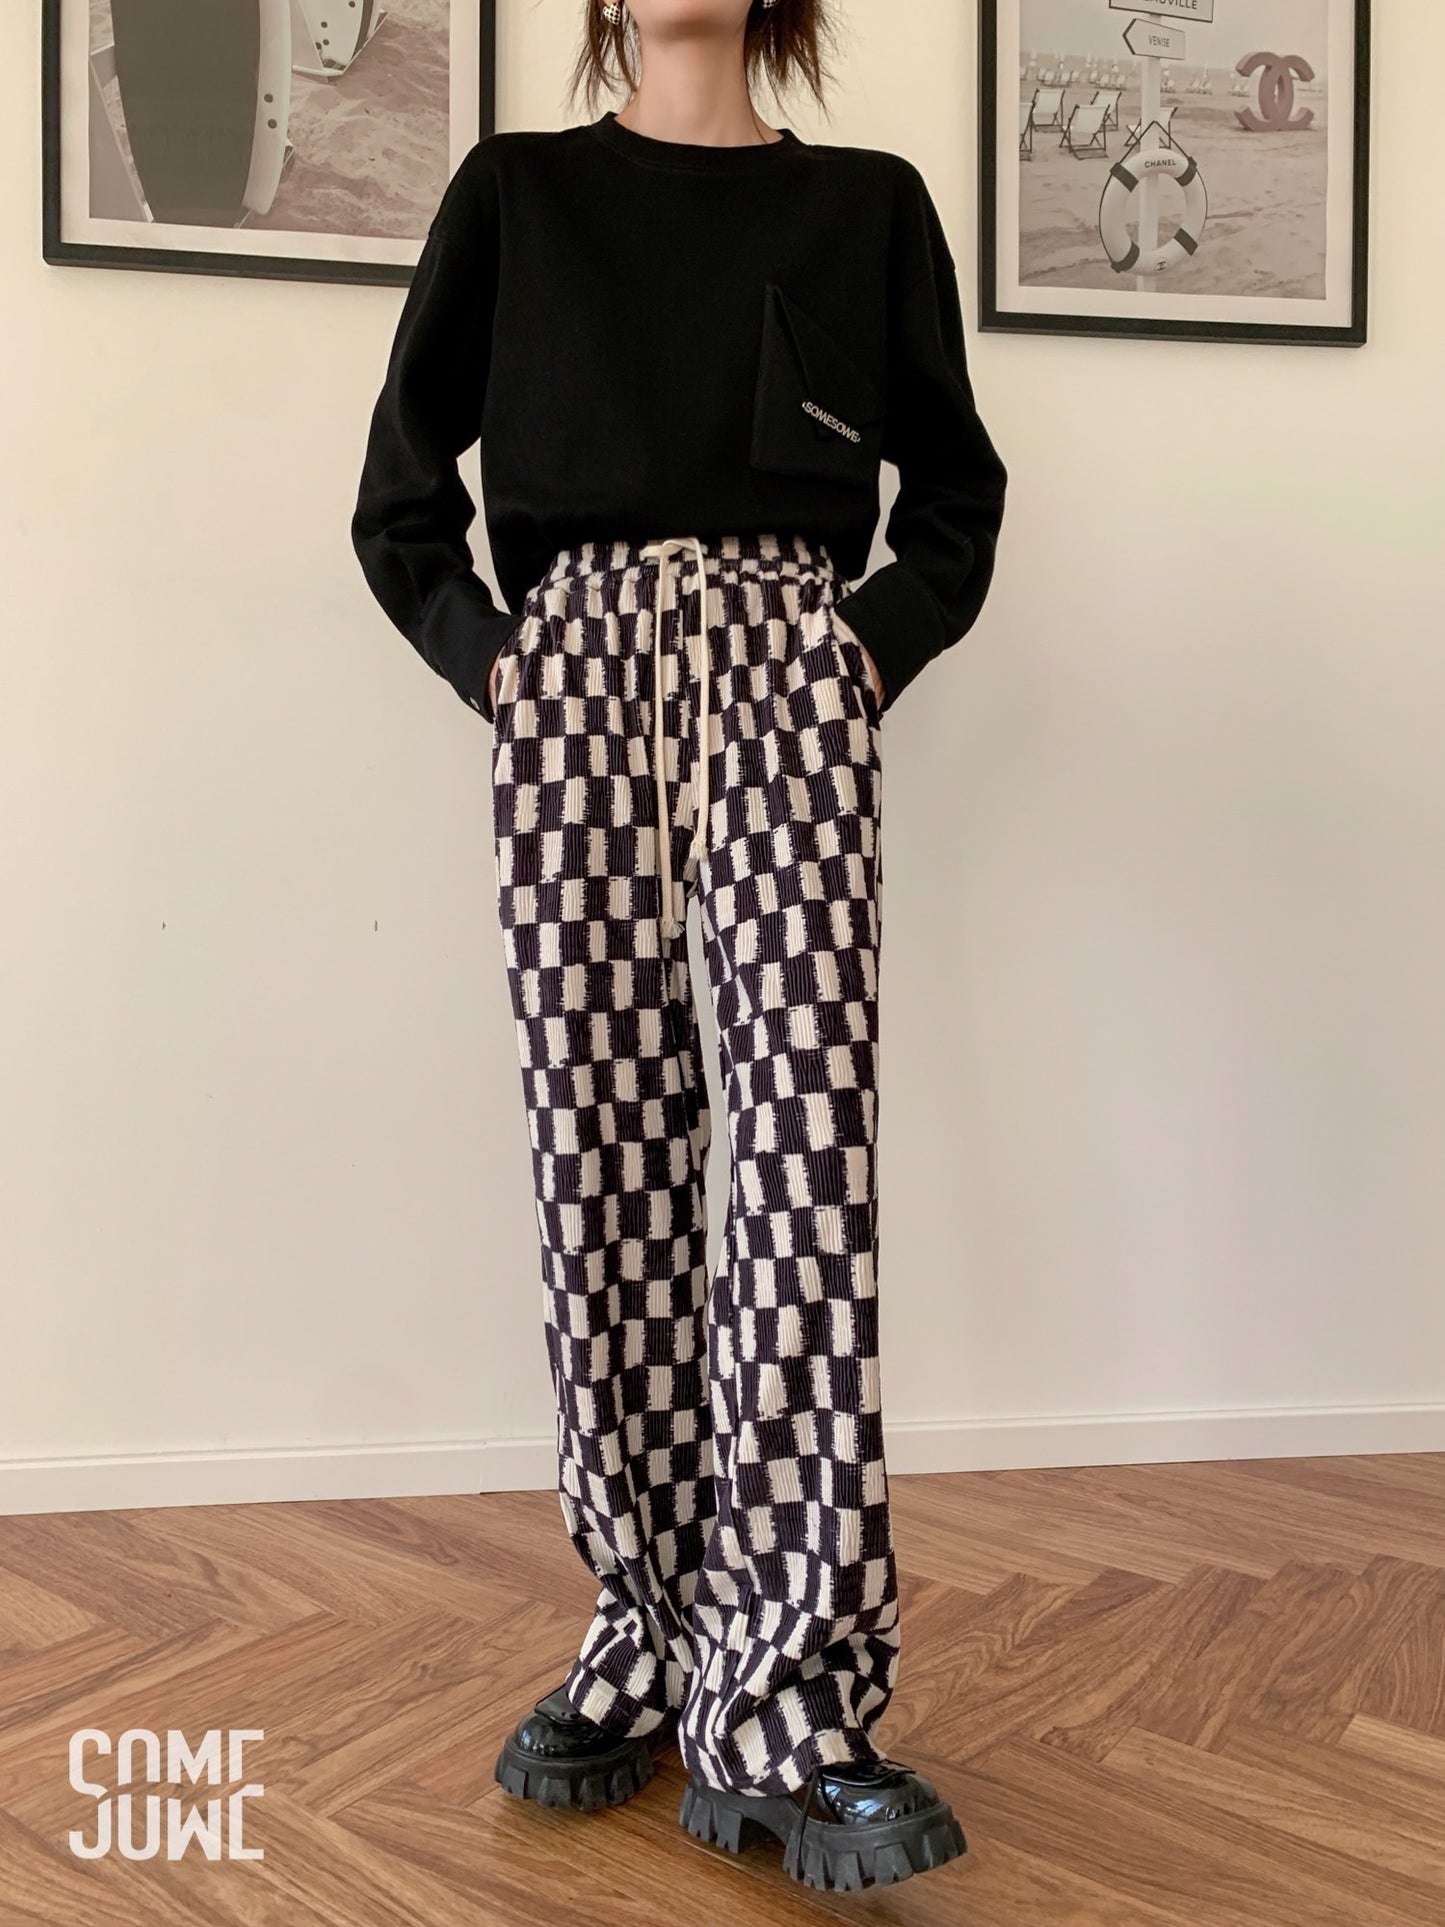 Checkered-board Print Wide-Leg Pants